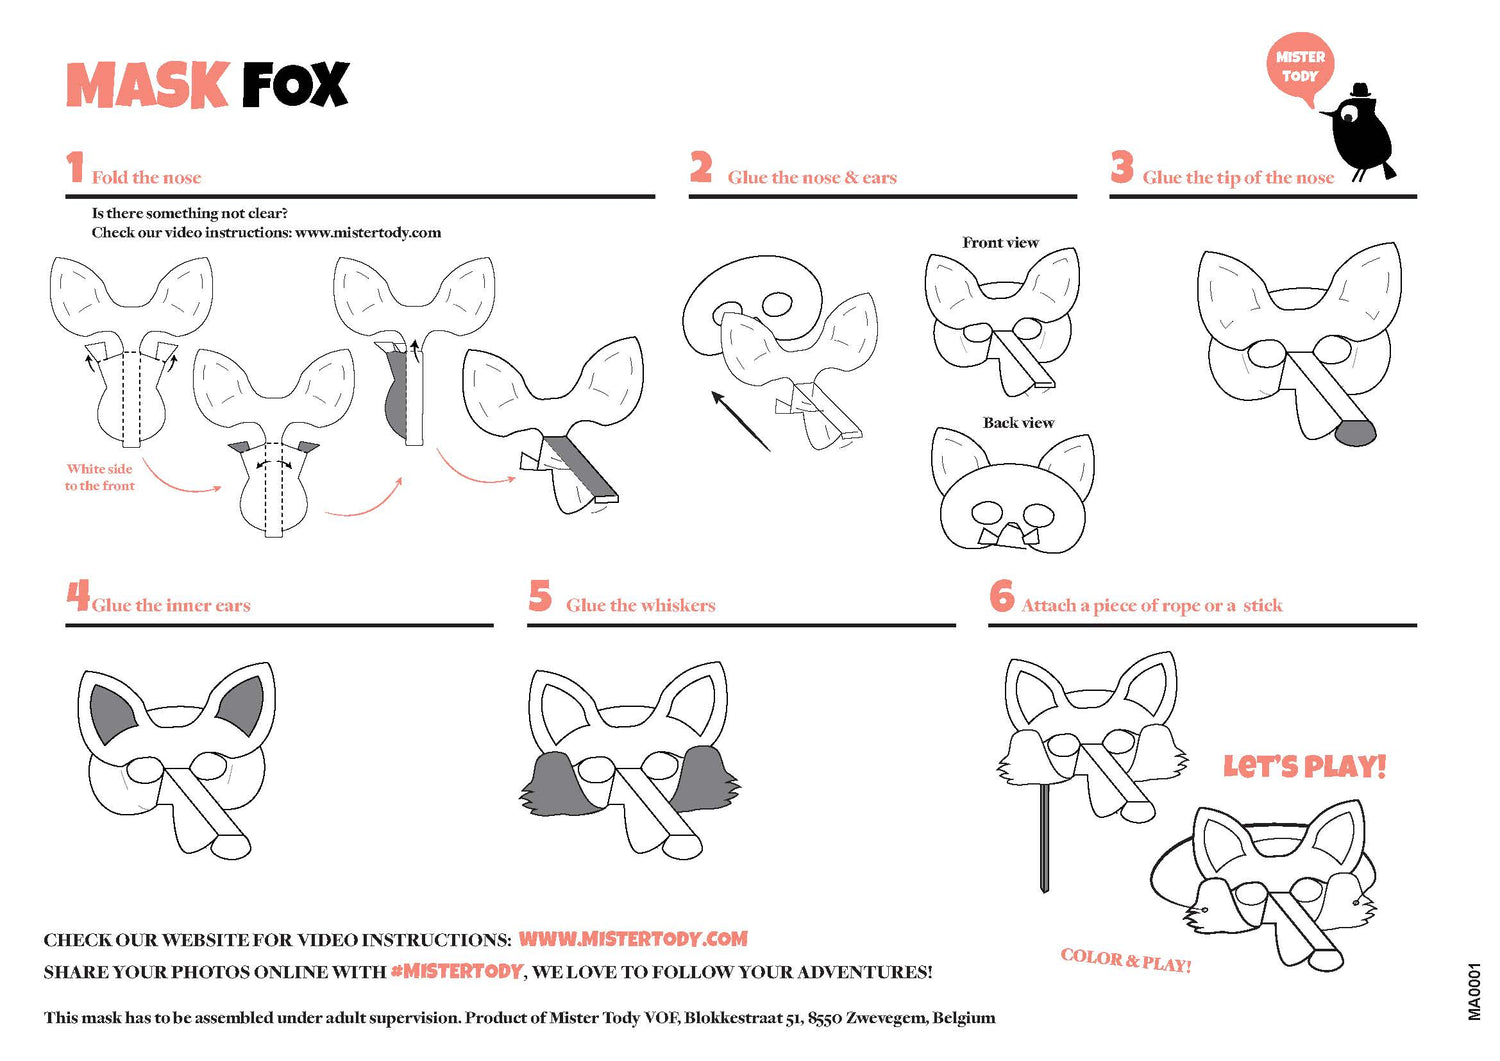 Fox mask cardboard